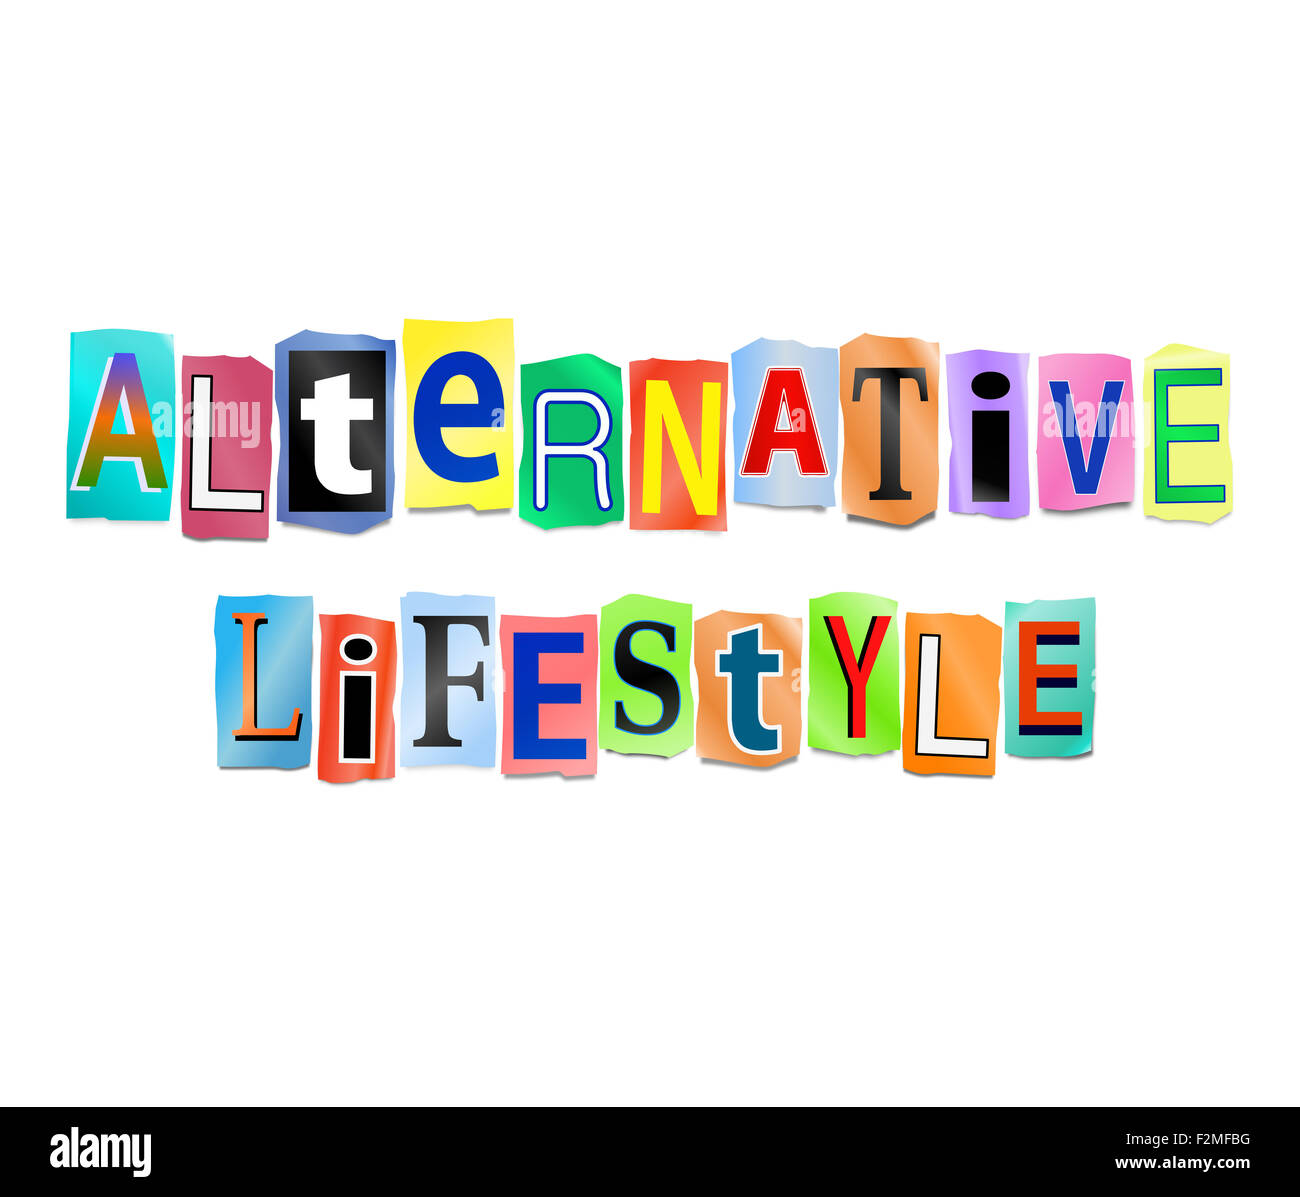 Alternative lifestyle. Stock Photo